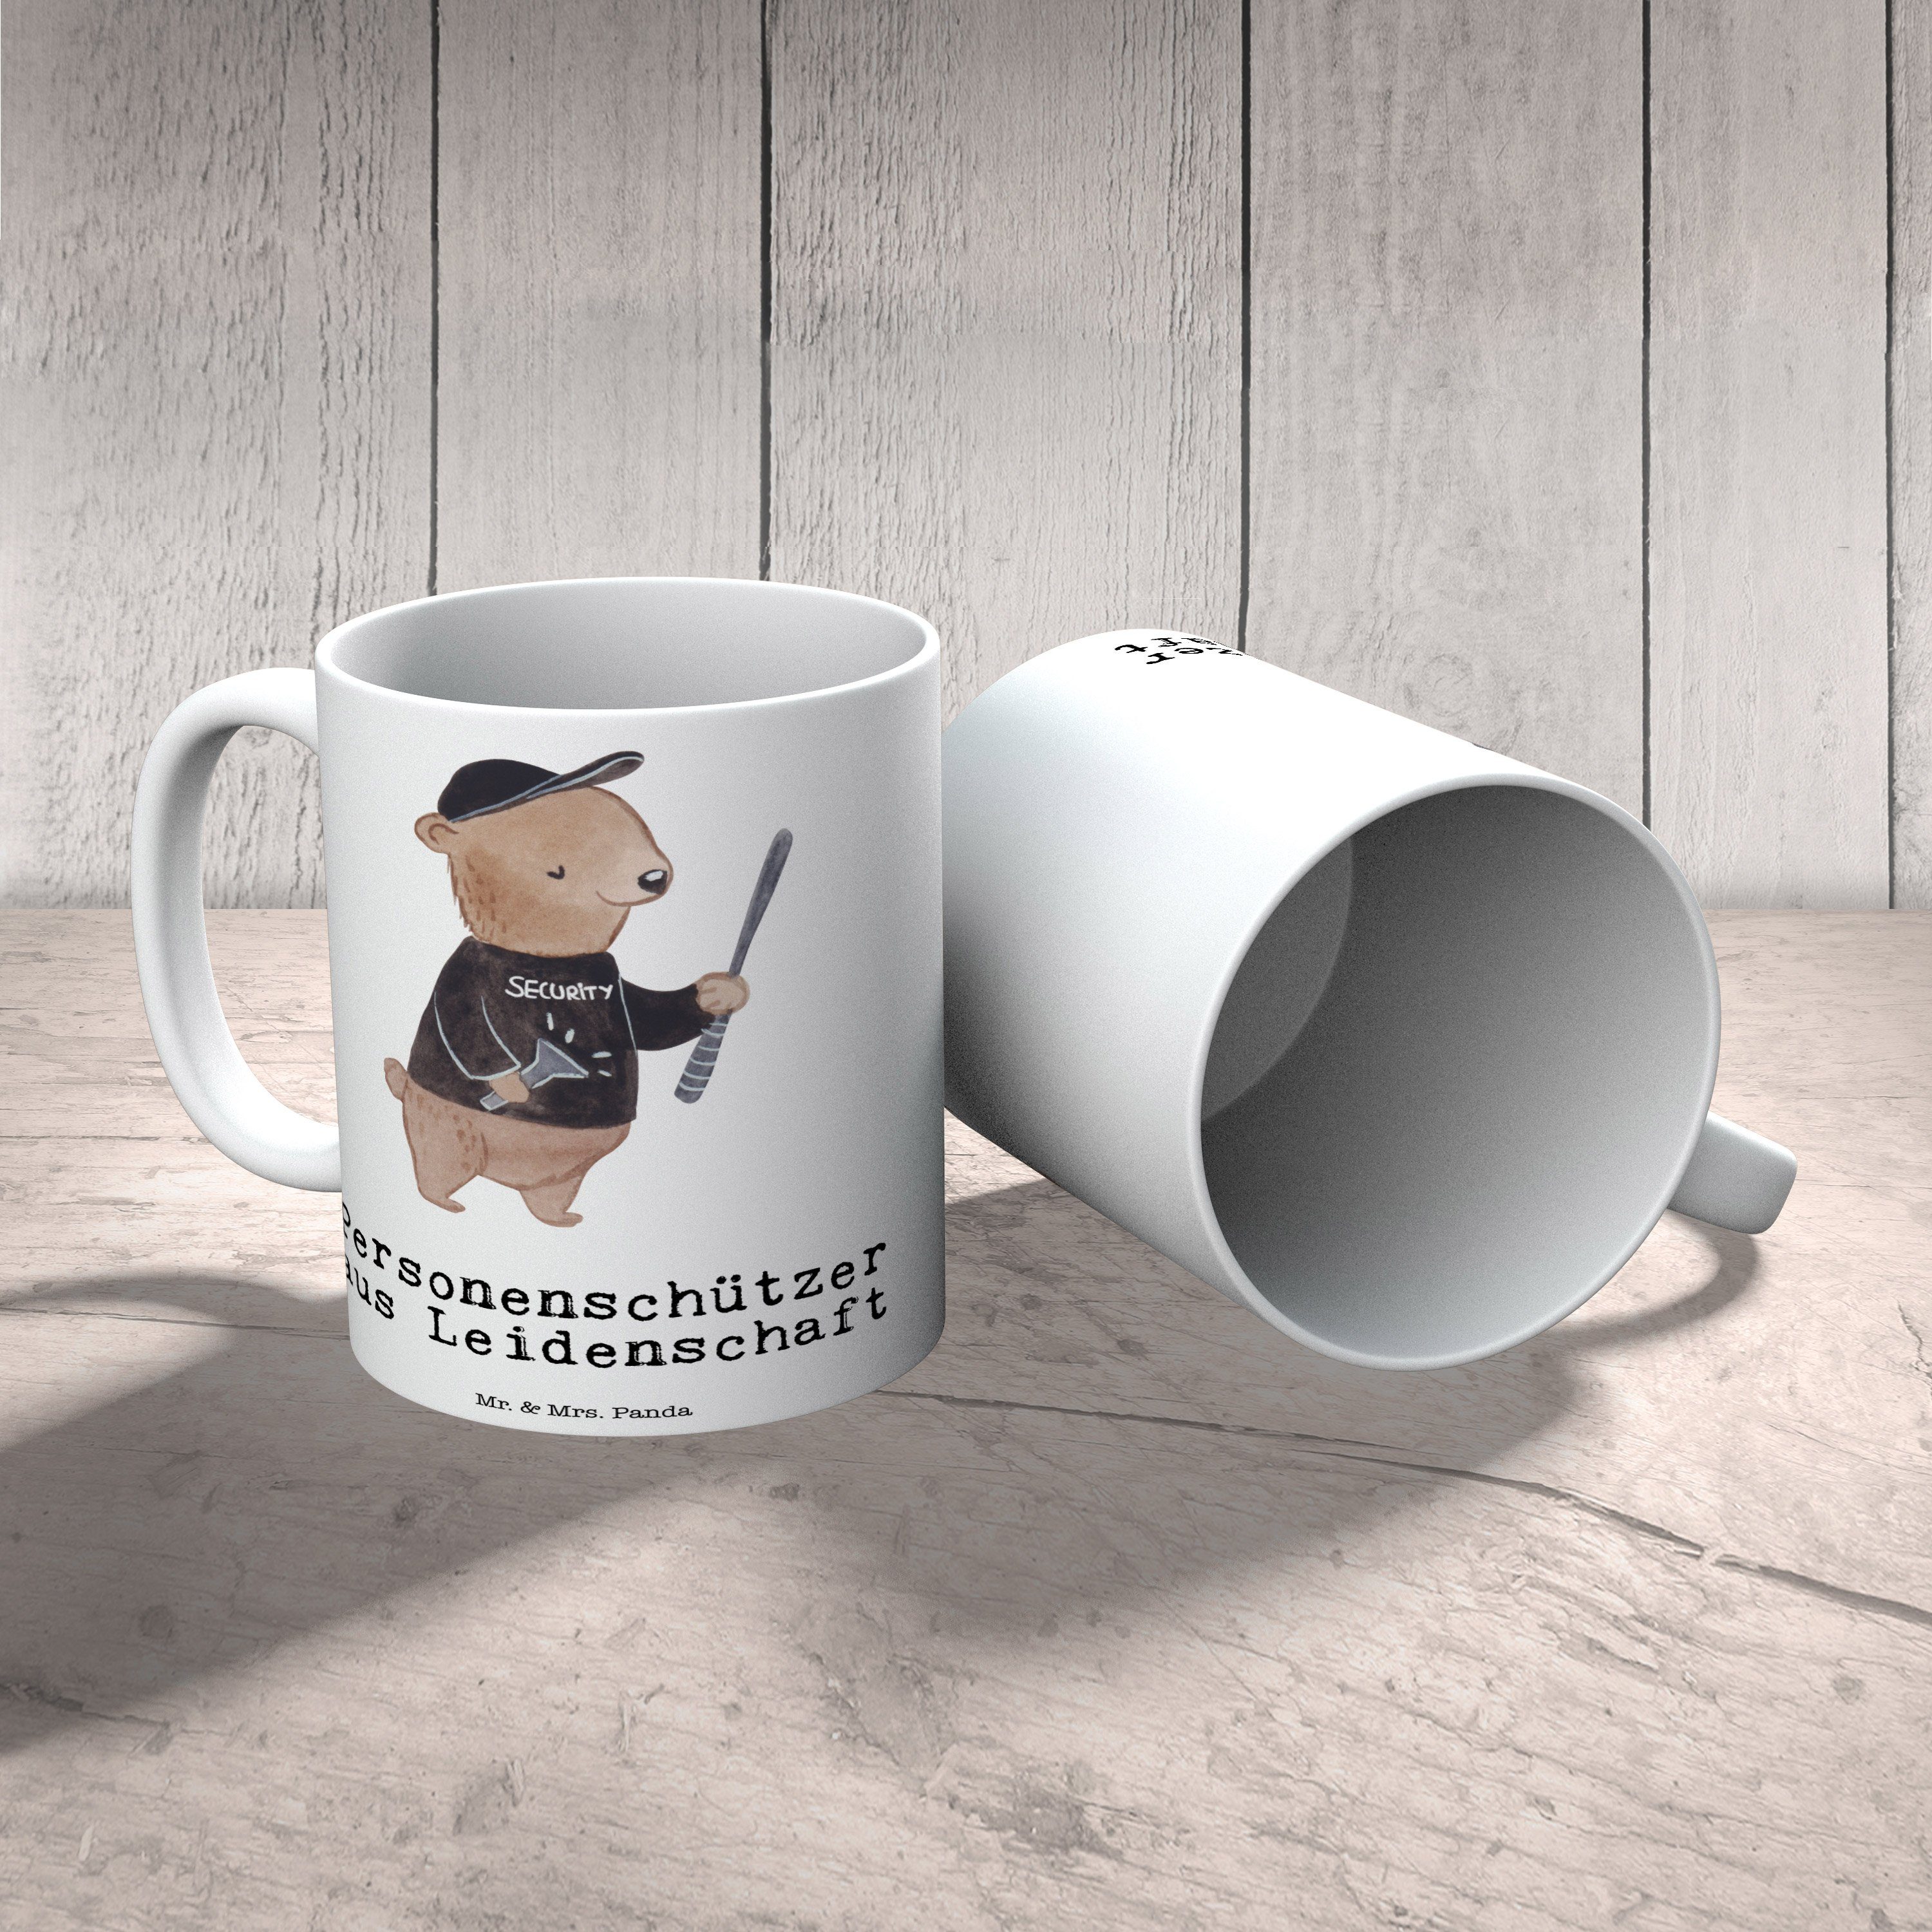 Personenschützer Mrs. - Kaffeetasse, Mr. Weiß Keramik aus Tas, Geschenk, & - Panda Tasse Leidenschaft